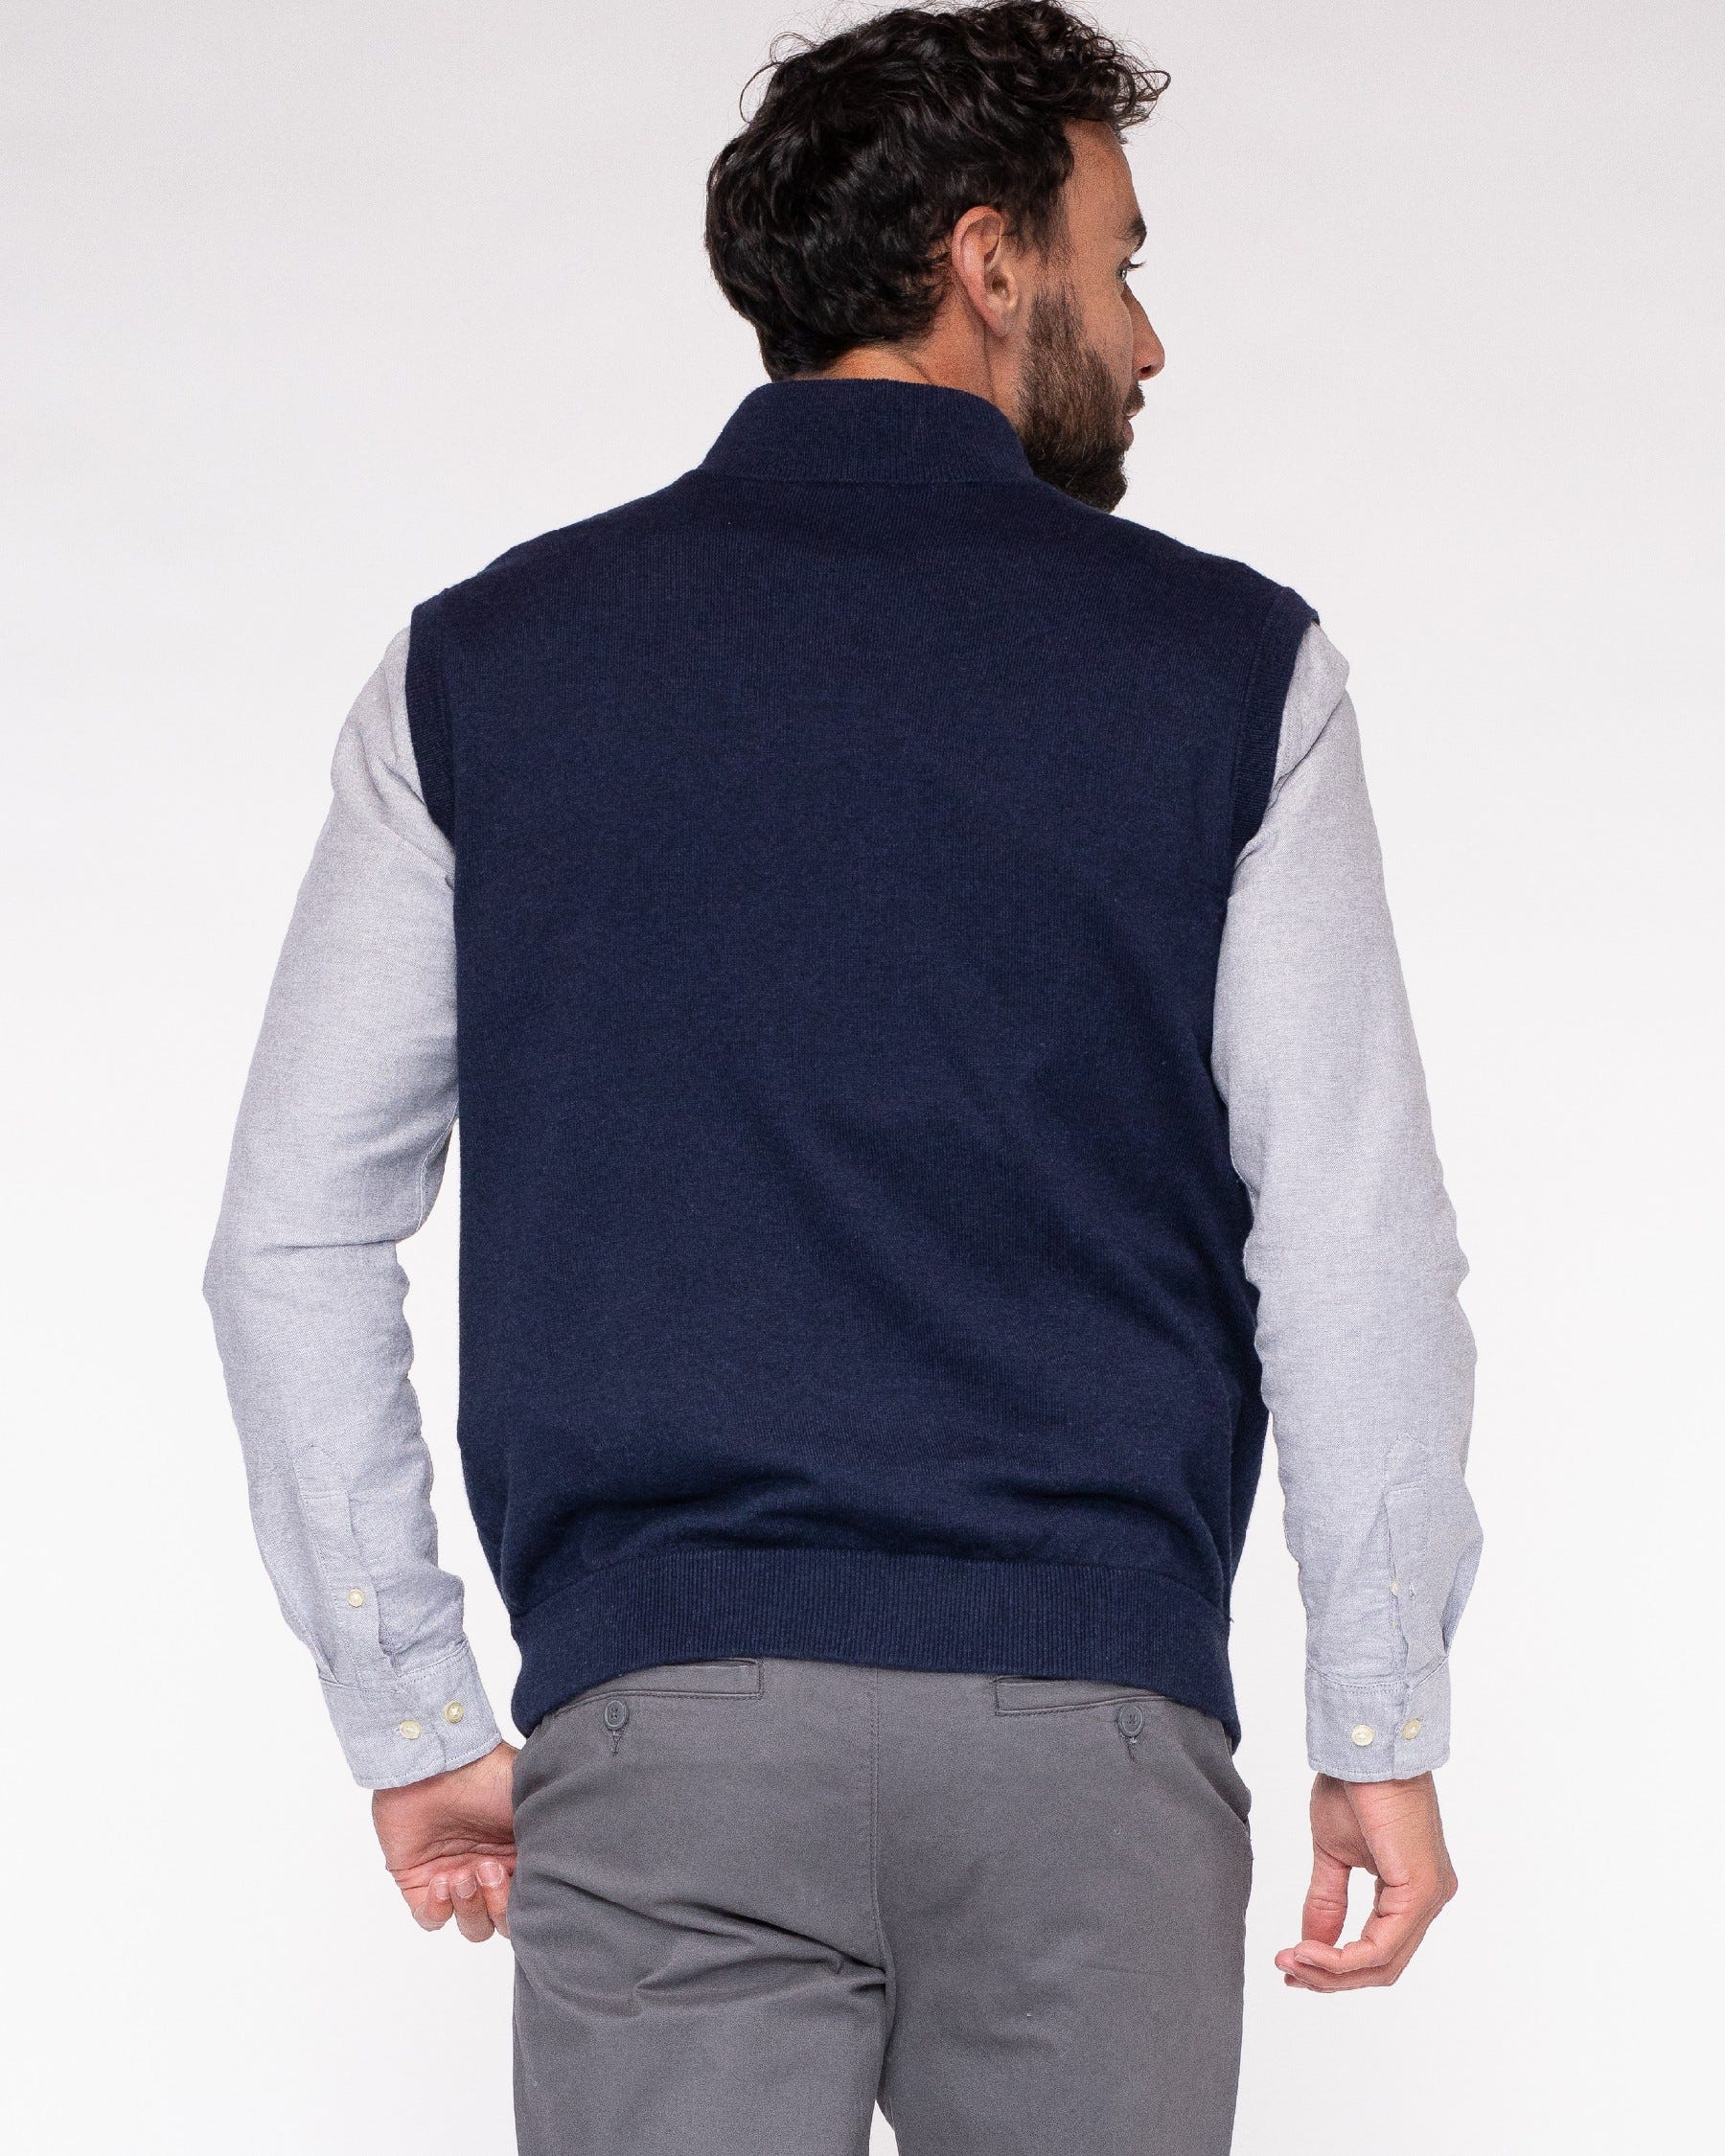 Cotton Cashmere 1/4 Zip V-Neck Sweater Vest (Choice of Colors) by Alashan Cashmere